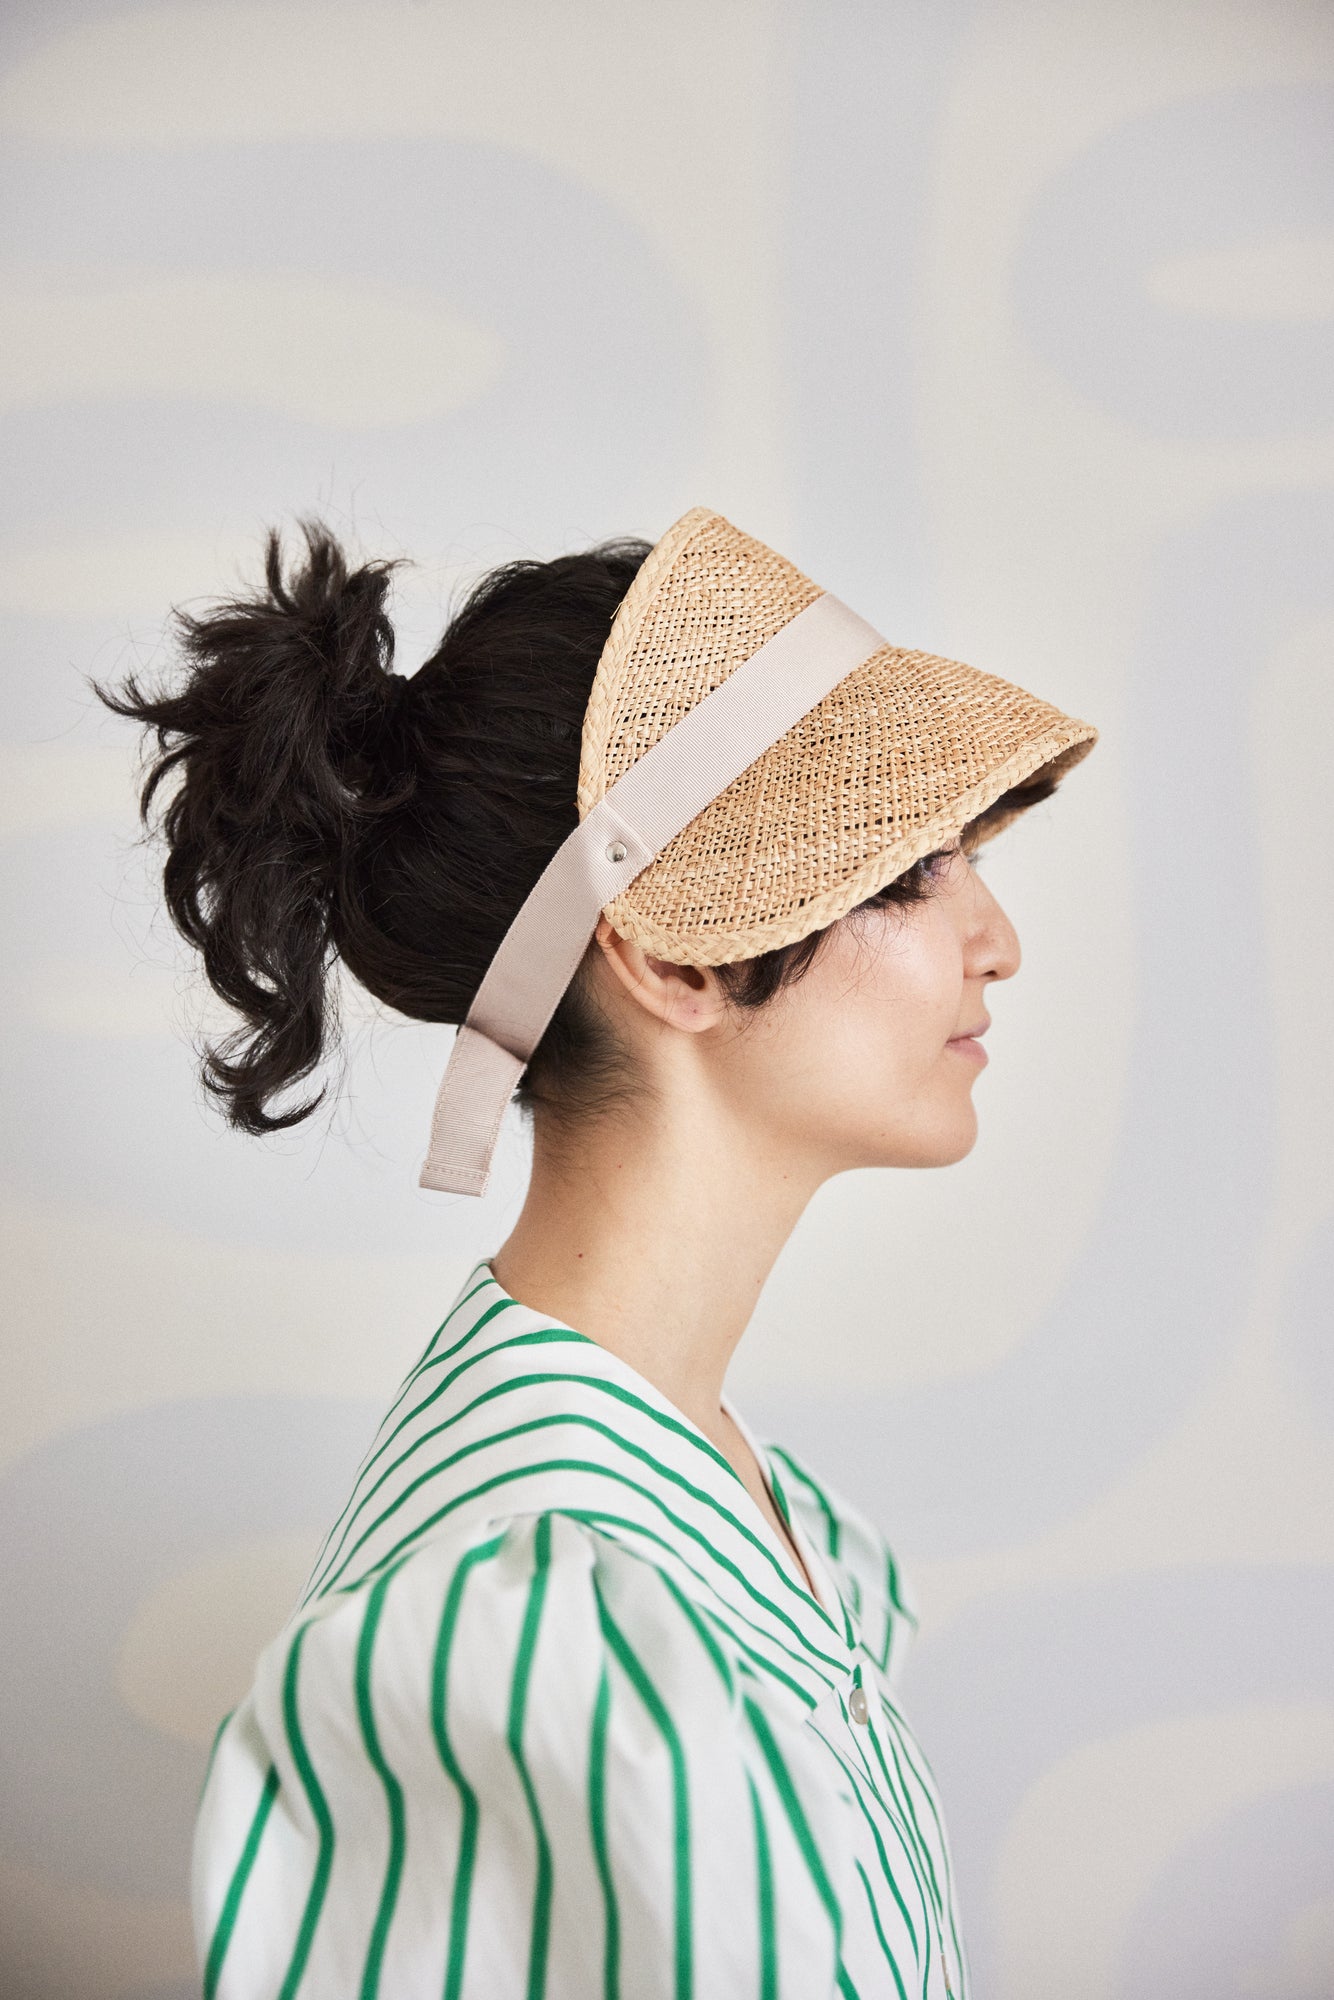 Arbor Sun Visor hat - Natural straw